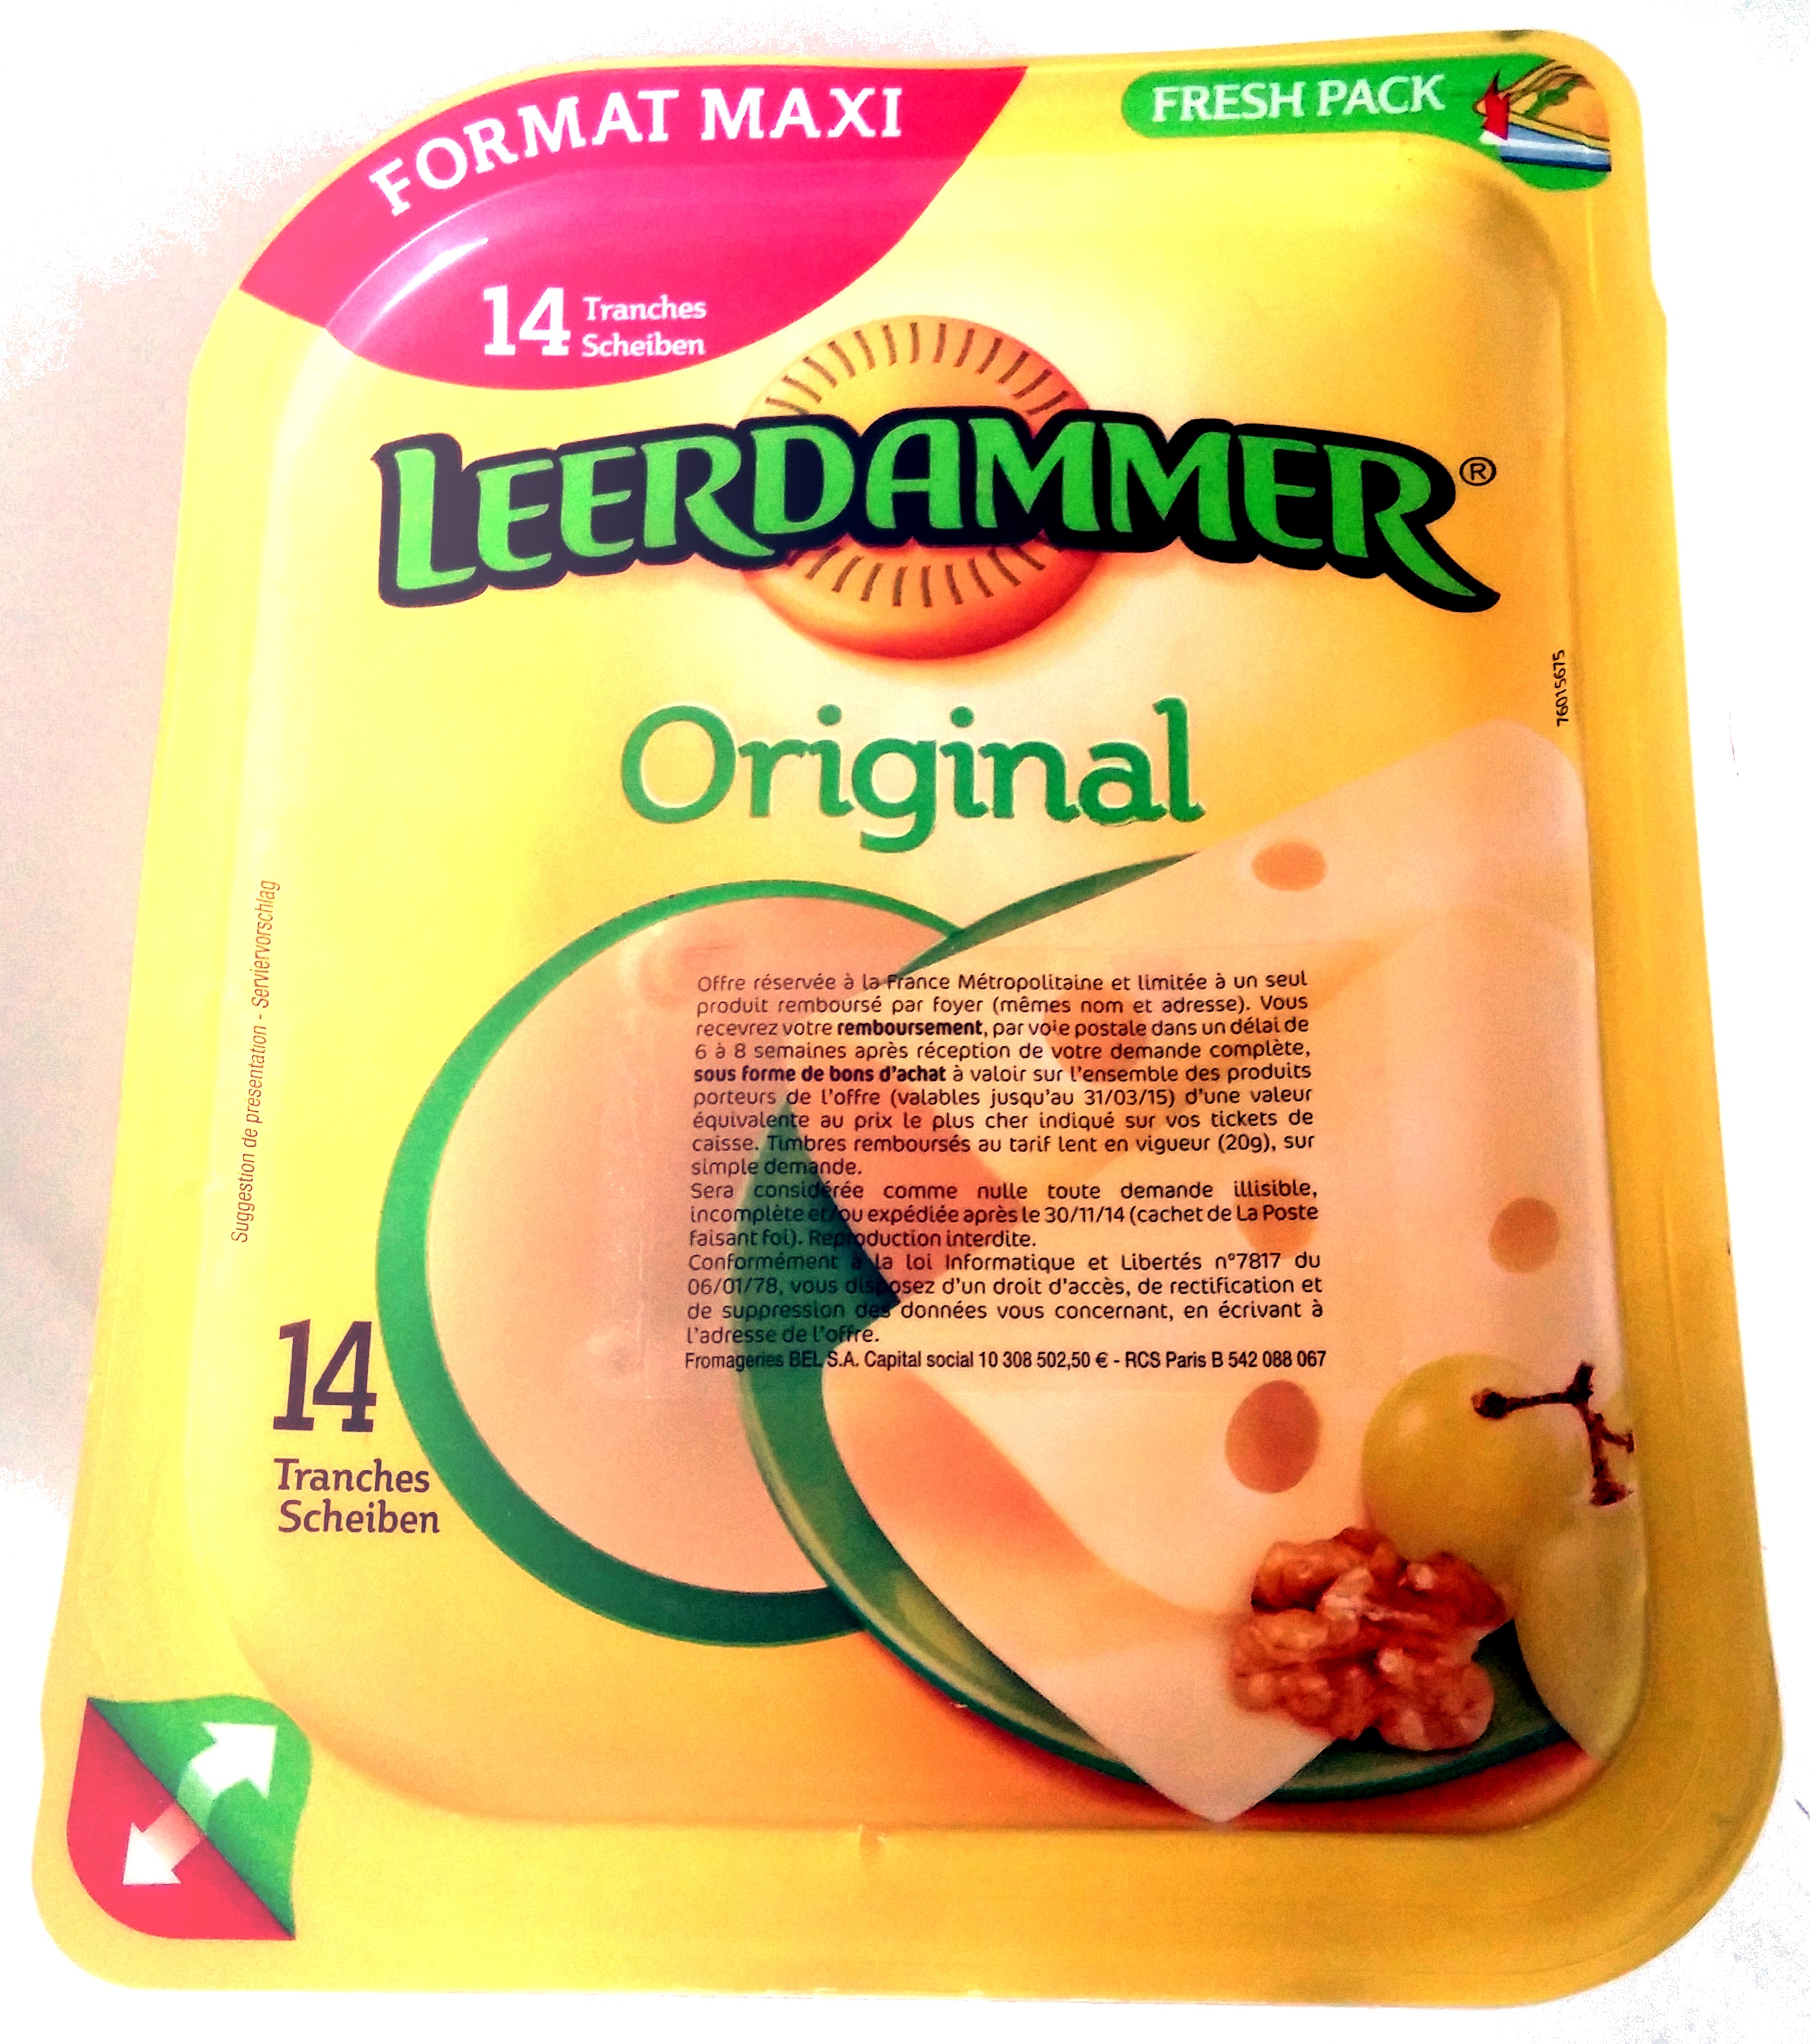 Leerdammer ® Original (27,5% MG) - 14 tranches - 350 g - Produit